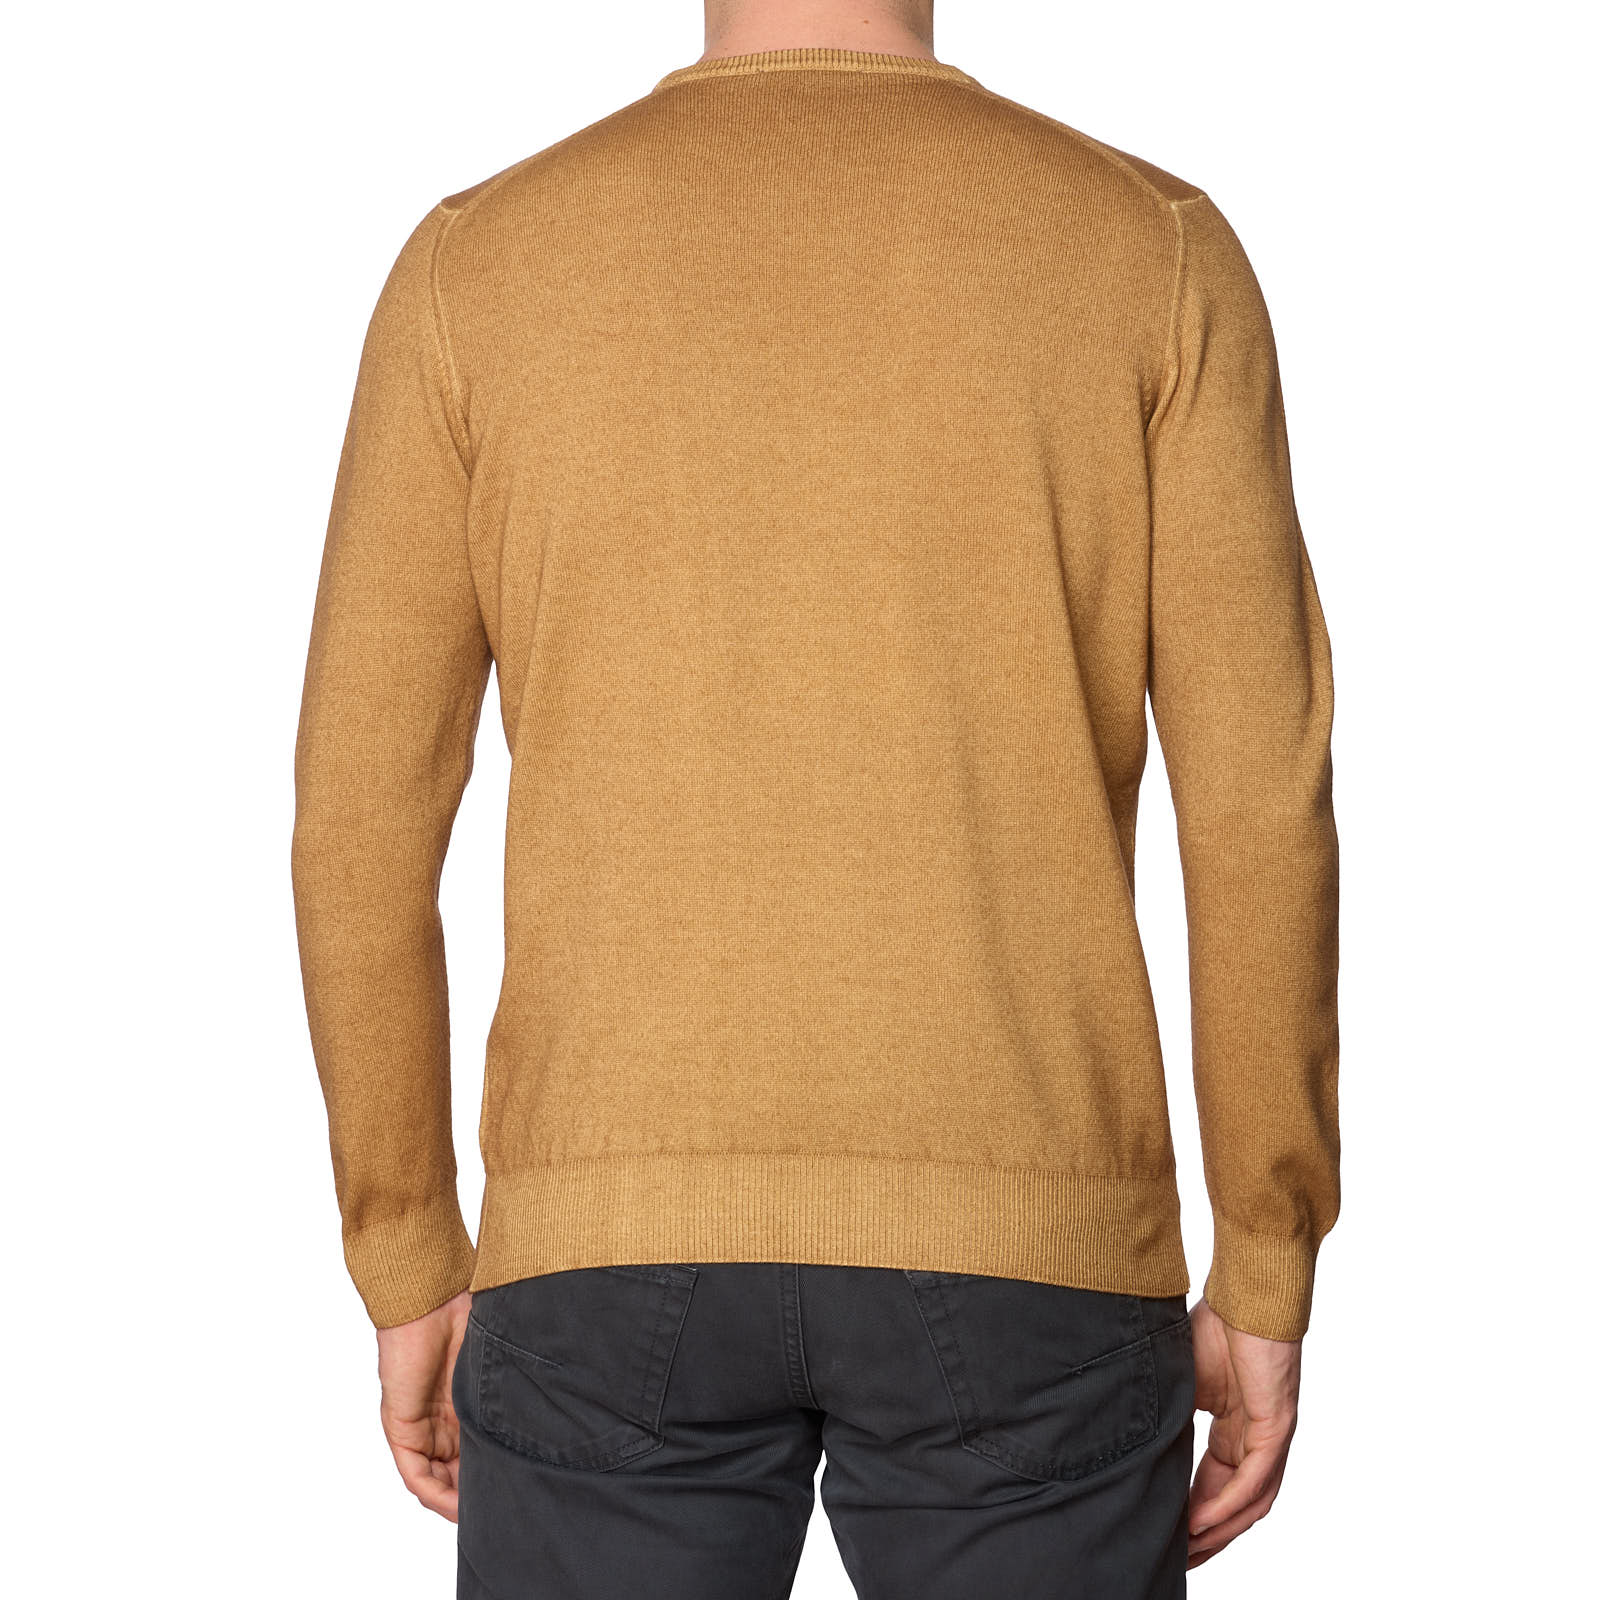 VANNUCCI Light Brown Cashmere Knit Crewneck Sweater EU 50 NEW US M